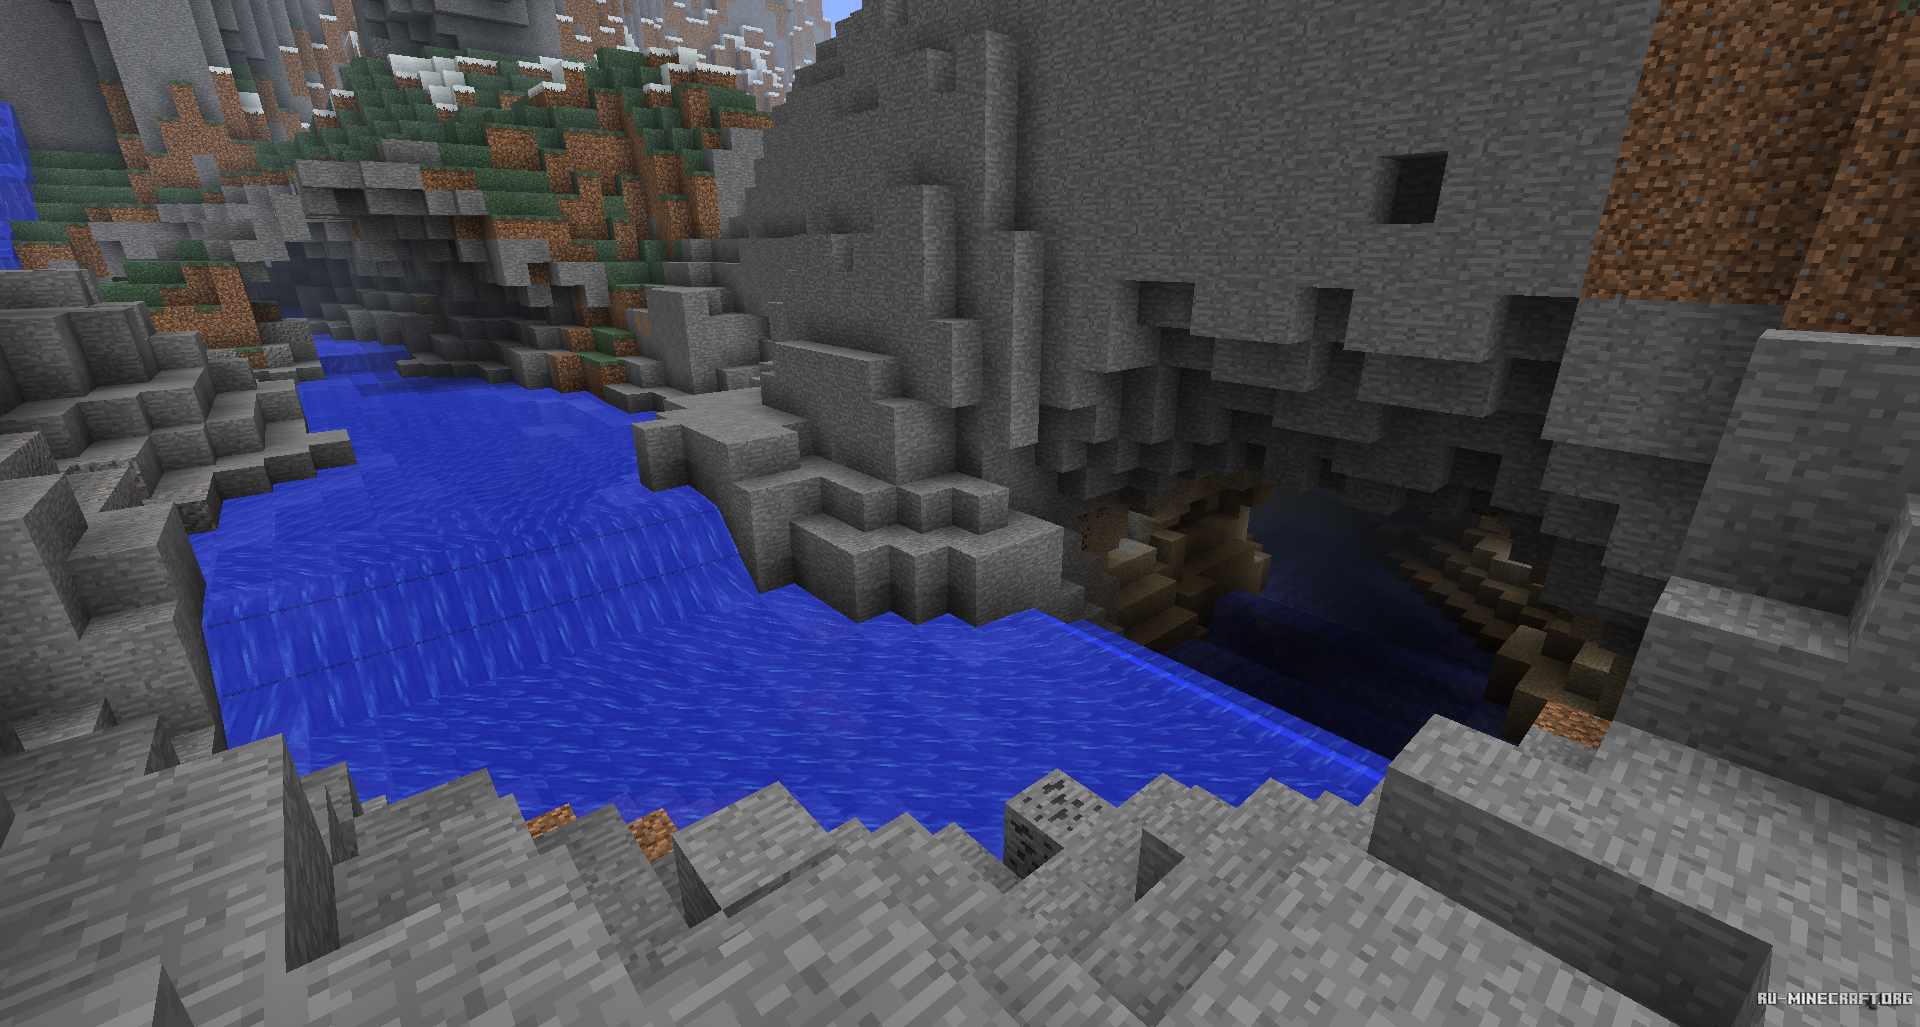 Minecraft mods 1.18 2. Streams 1.12.2. Реки майнкрафт 1.16. Мод на реалистичную воду. Мод на реалистичность реки в МАЙНКРАФТЕ.